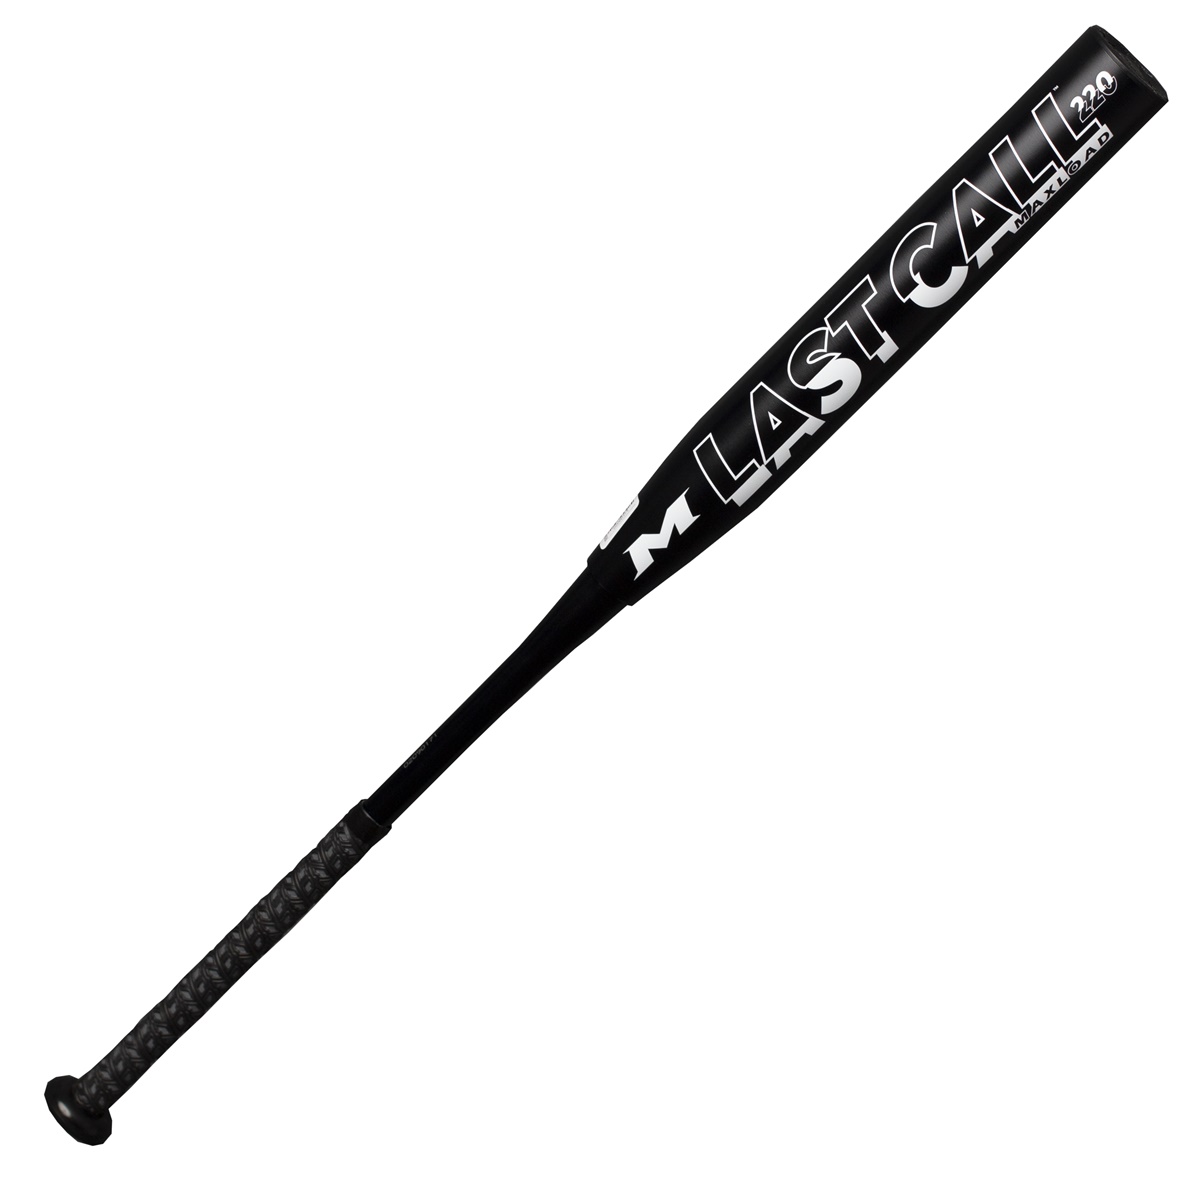 miken-last-call-12-barrel-maxload-usssa-slow-pitch-softball-bat-34-inch-27-oz MLC12U-3-27 Miken 658925045486 Dont miss out on the 2021 Last Call USSSA bat! USSSA